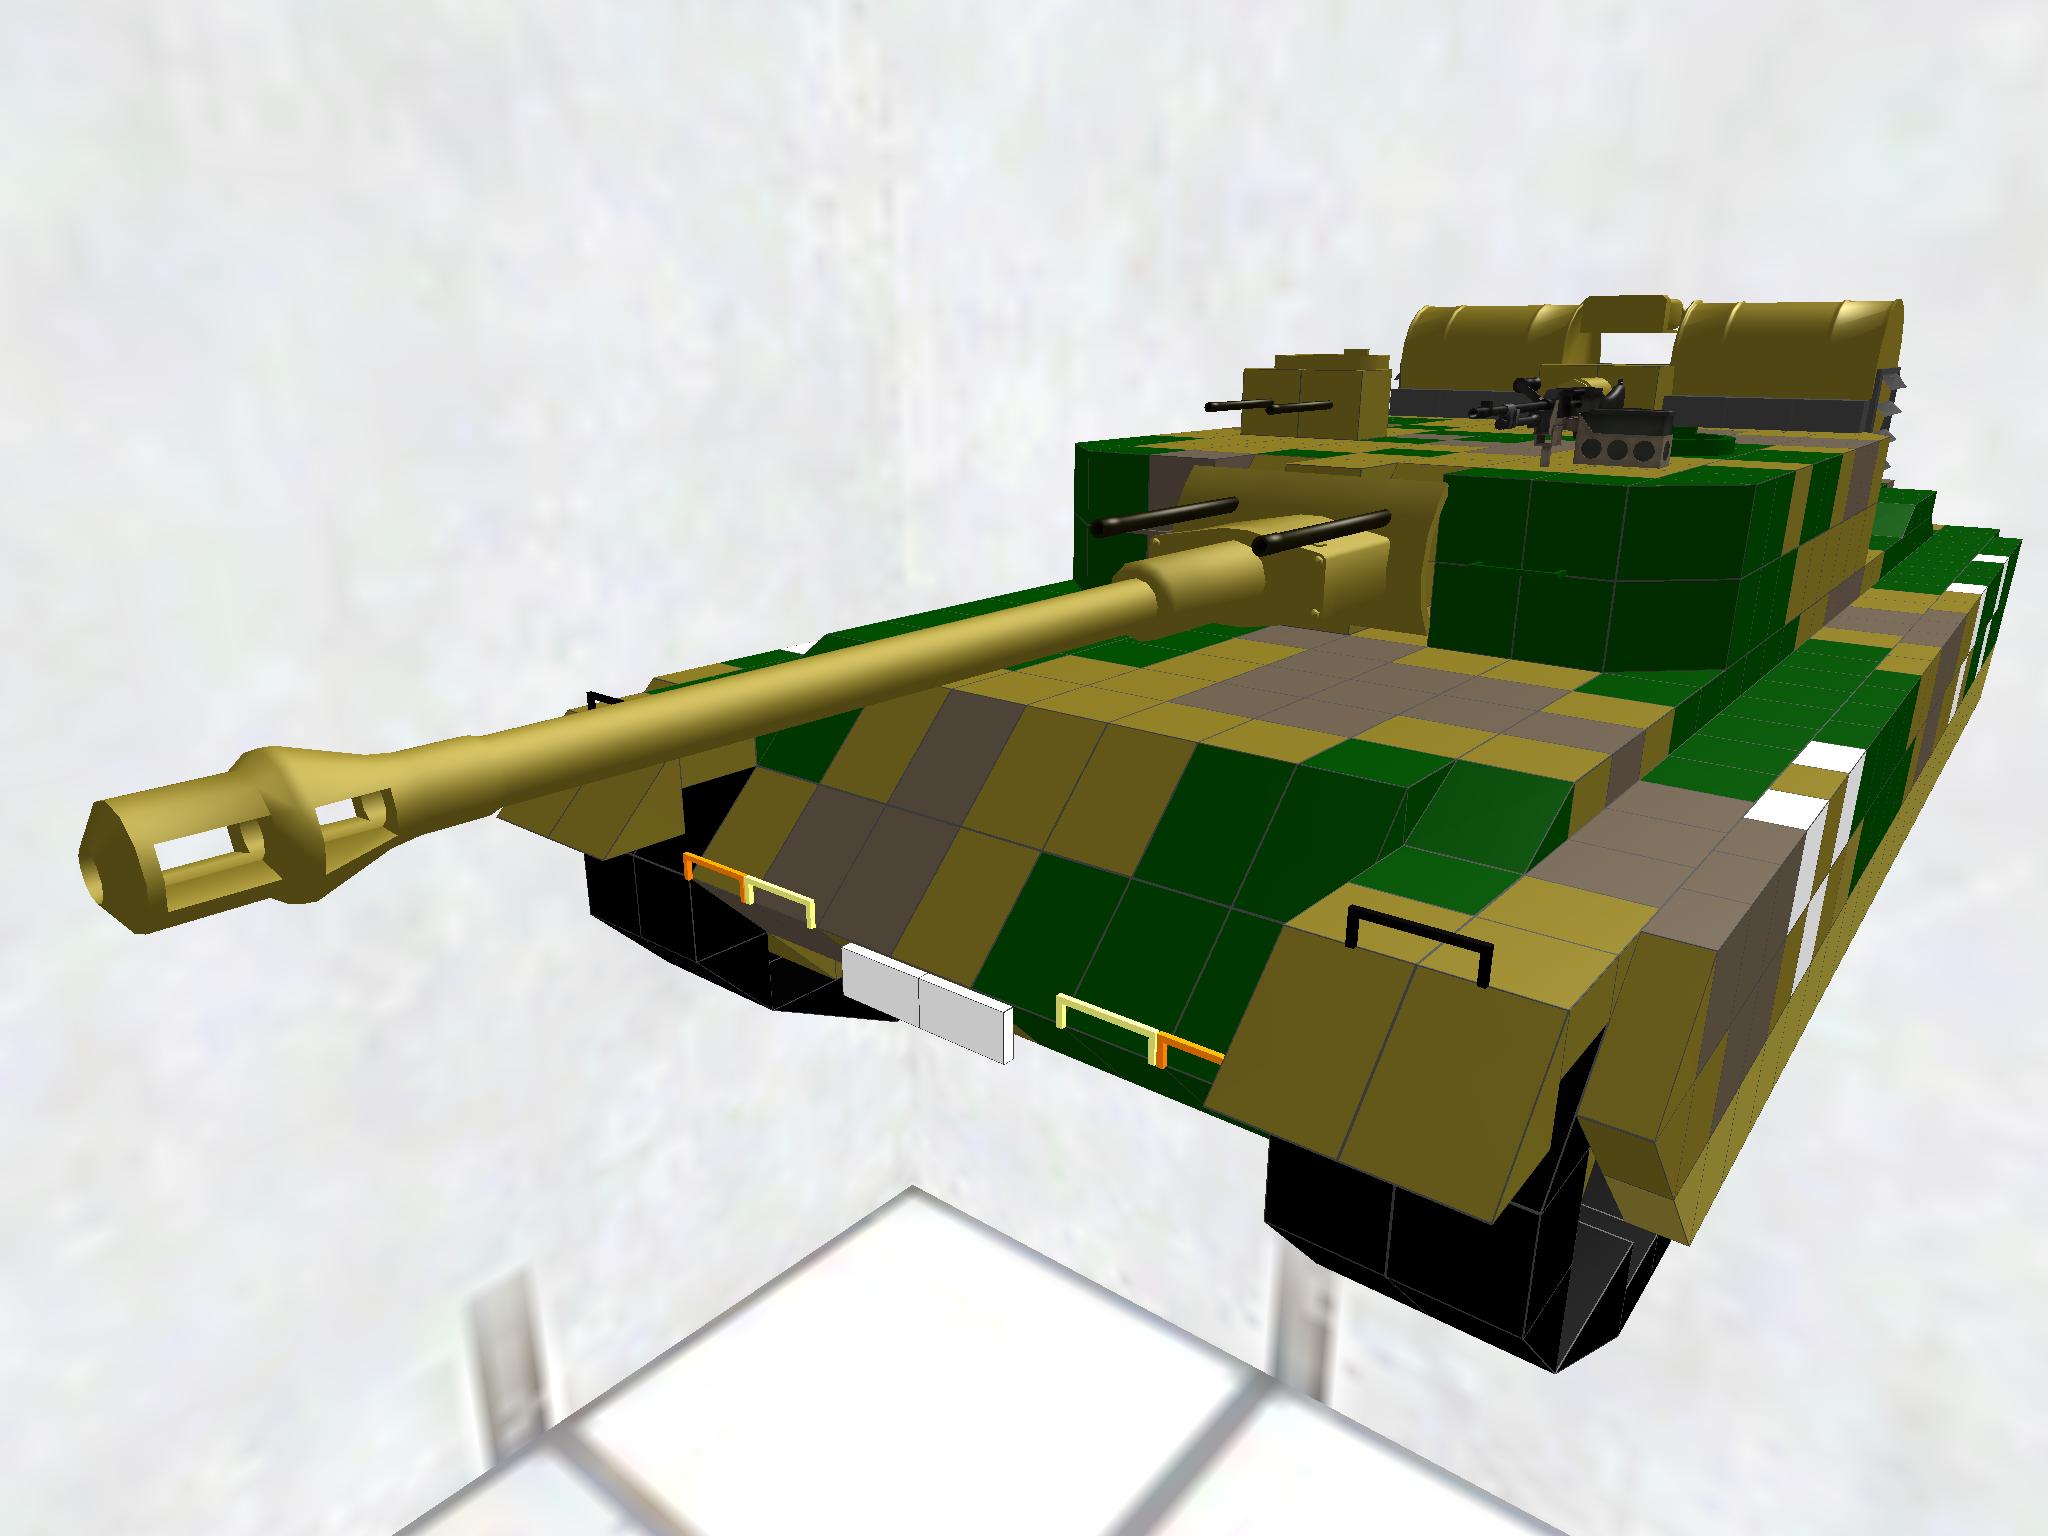 Type 15 "MBT"(15式主力戦車)